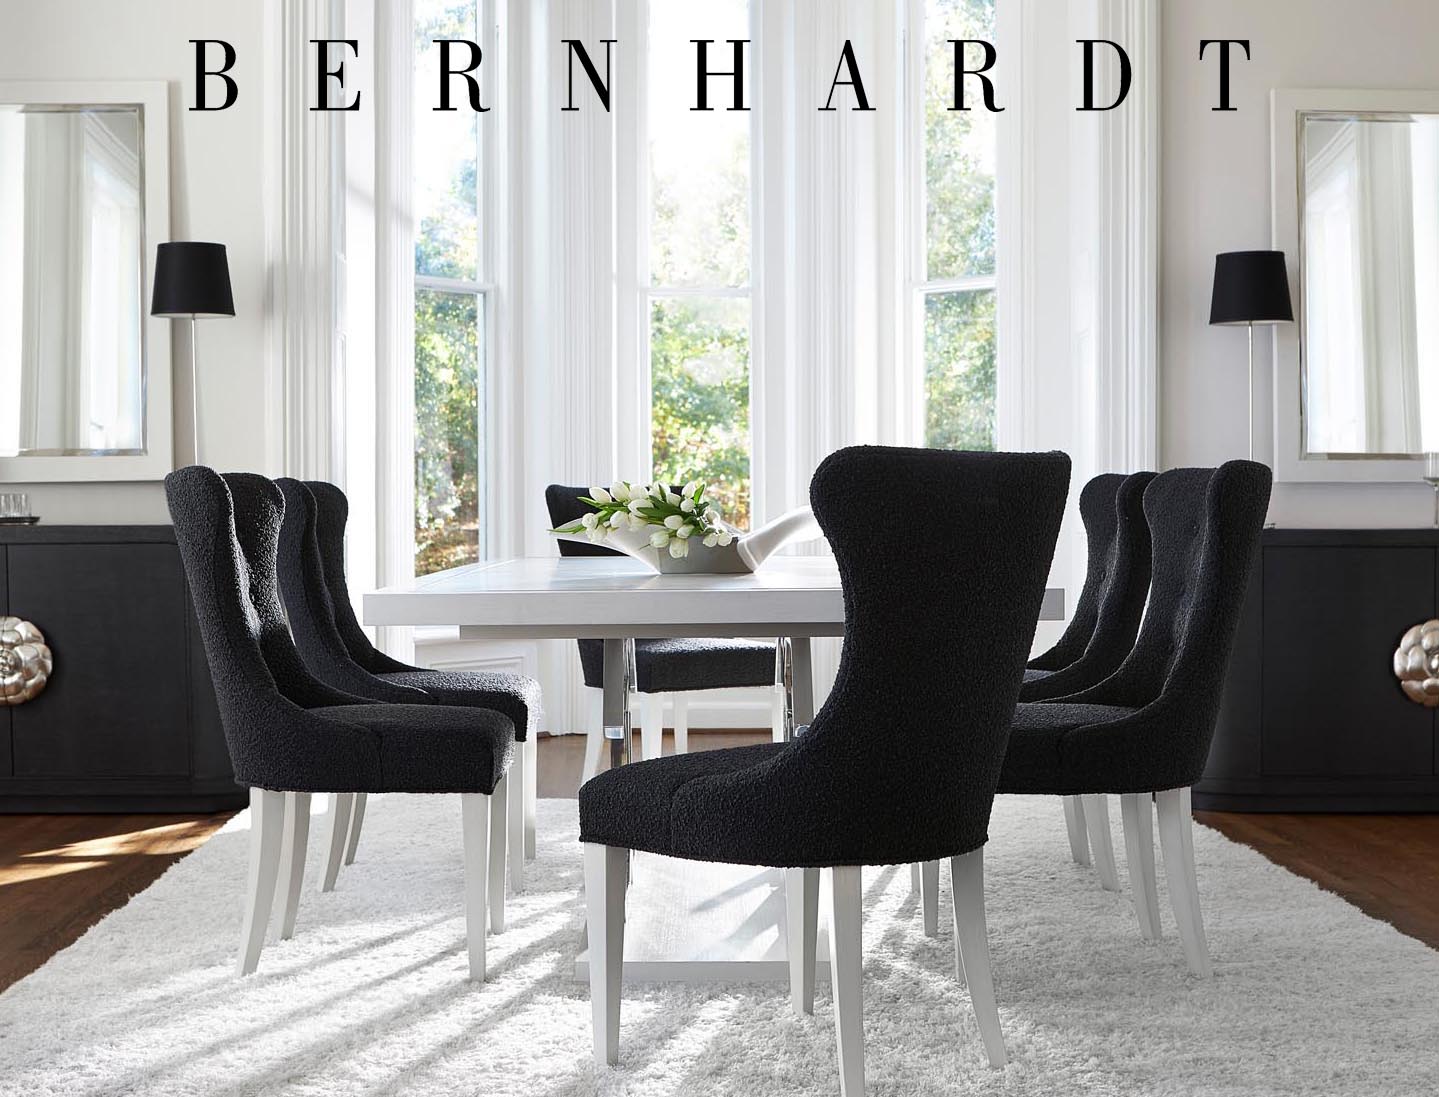 Shop Homethreads for Bernhardt Furniture and Decor